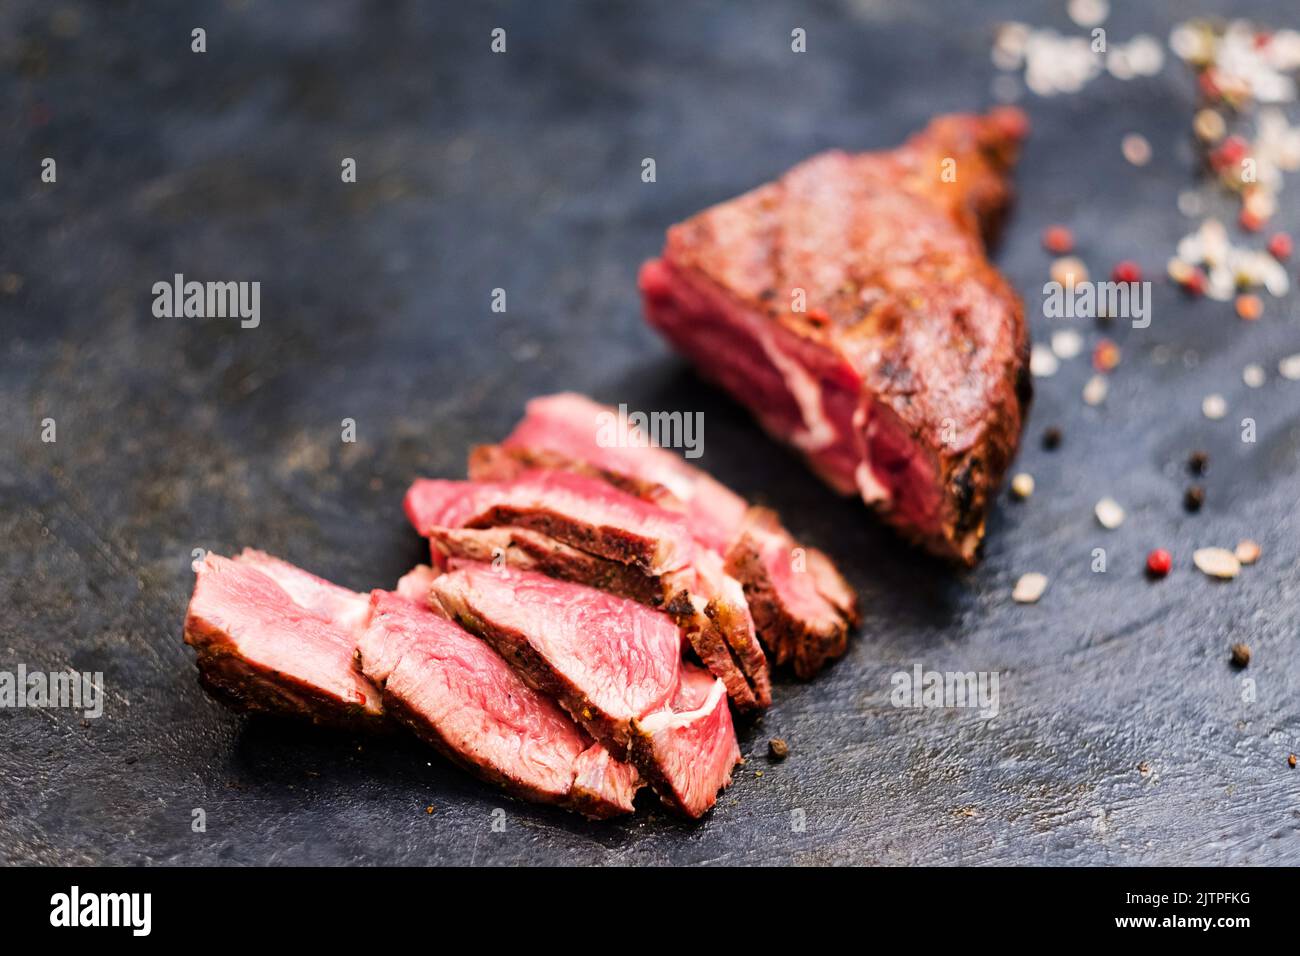 bbg meat recipe cowboy steak medium grilled beef Stock Photo